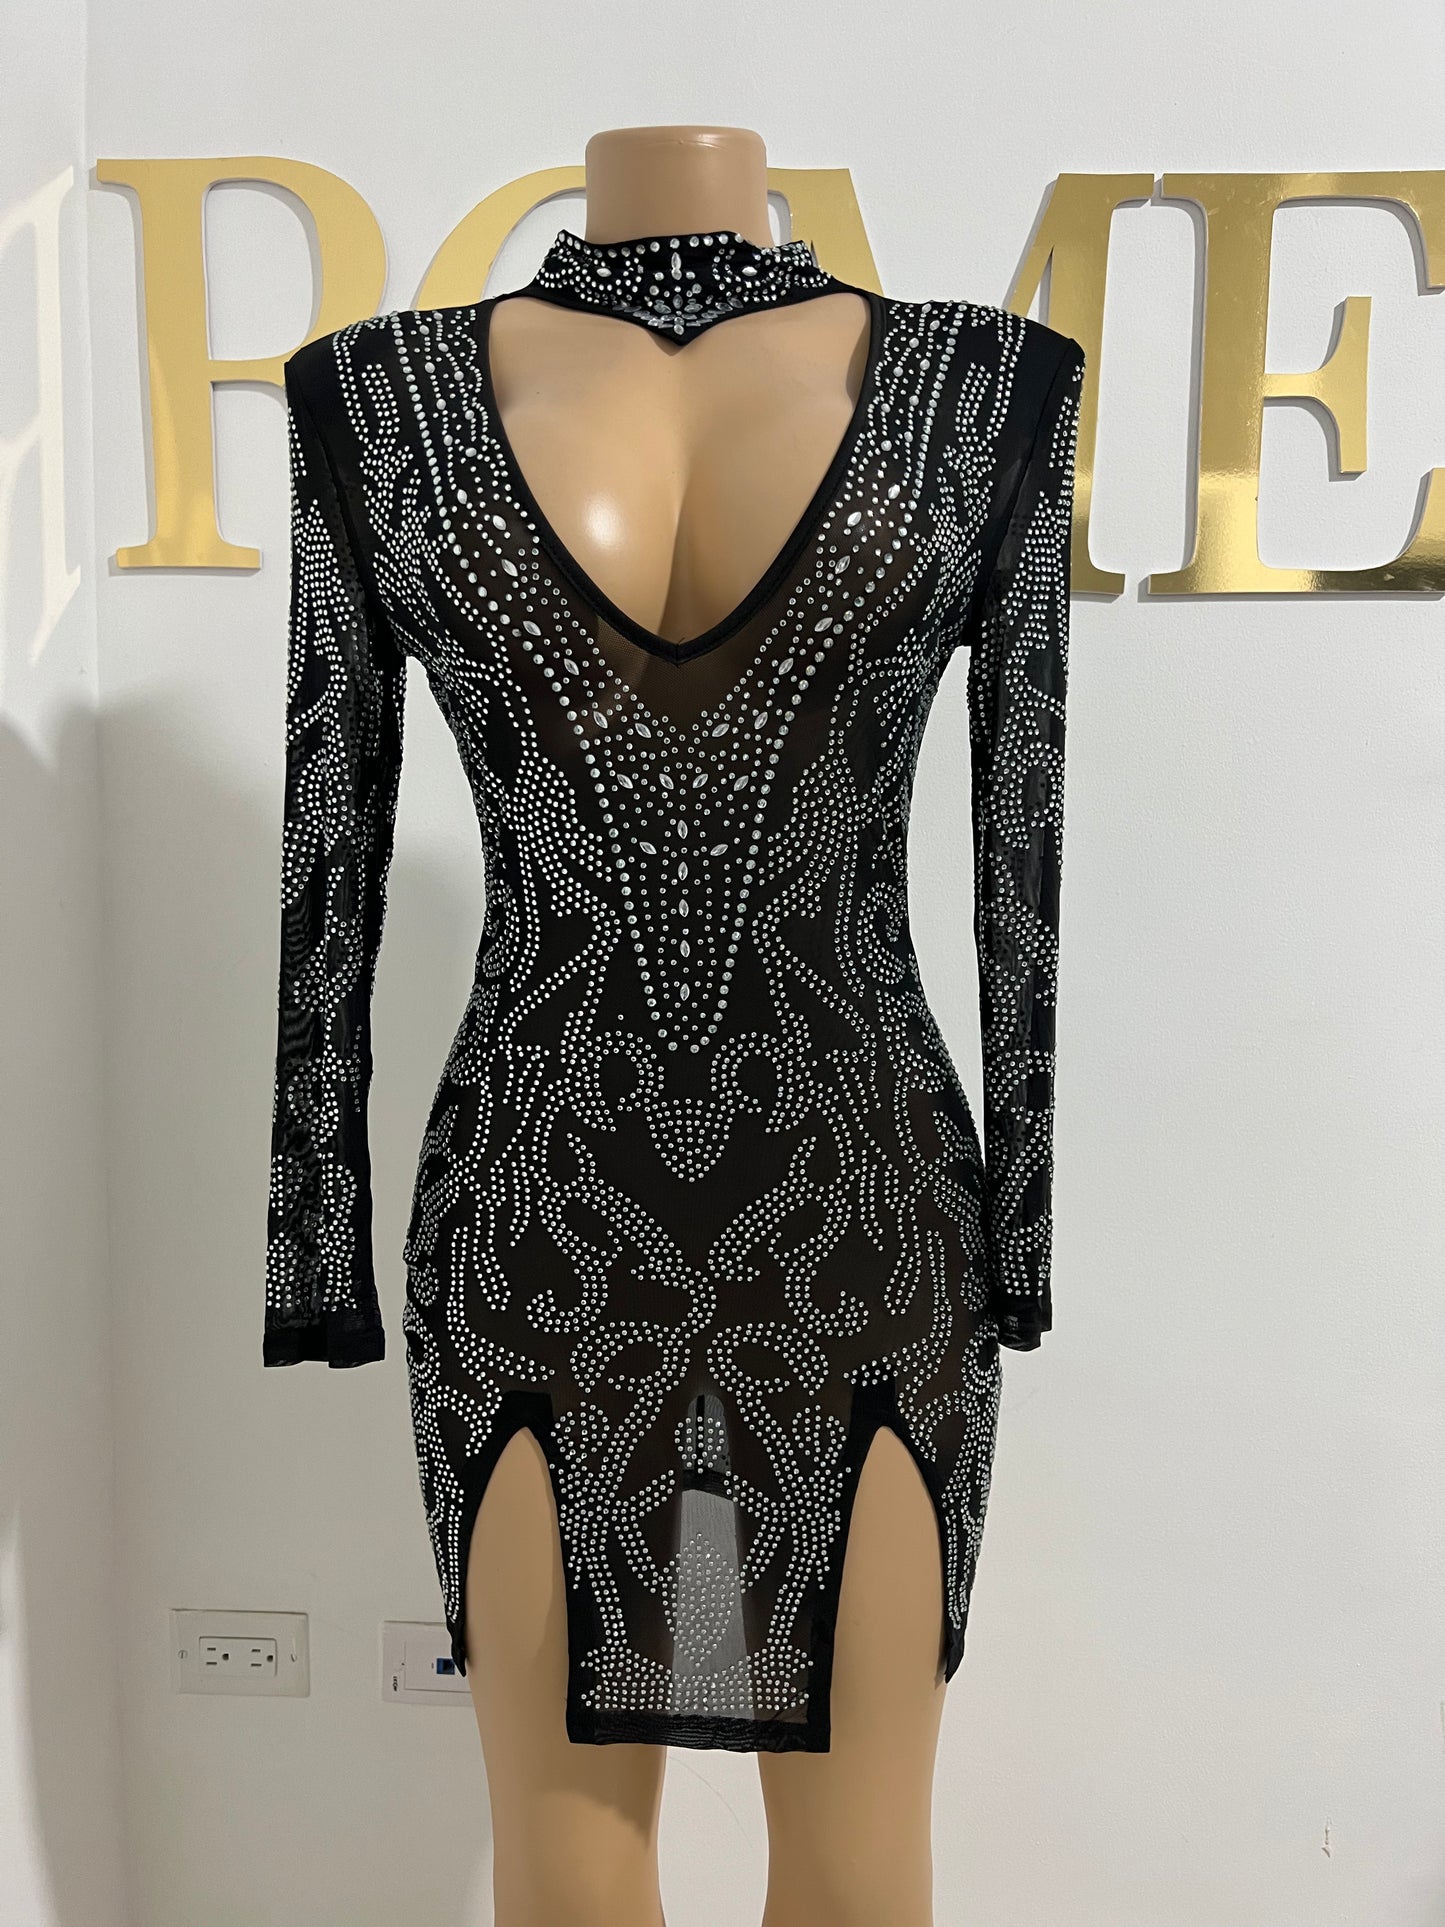 London Crystal Dress (Black)